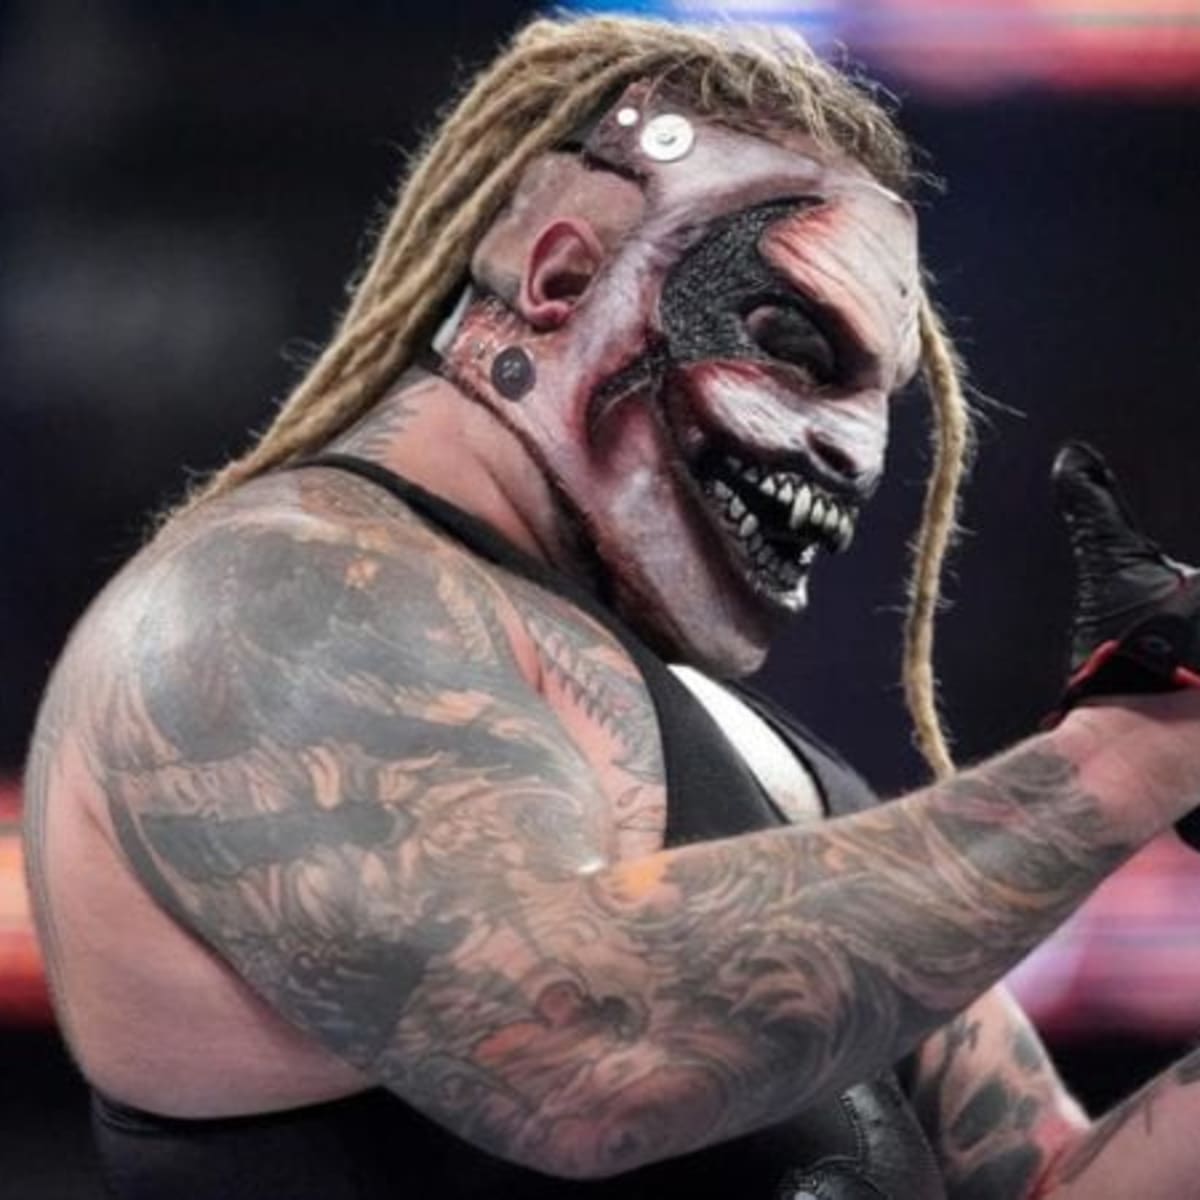 Look: Bray Wyatt Responds to Rumor WWE Plans to Make 'The Fiend